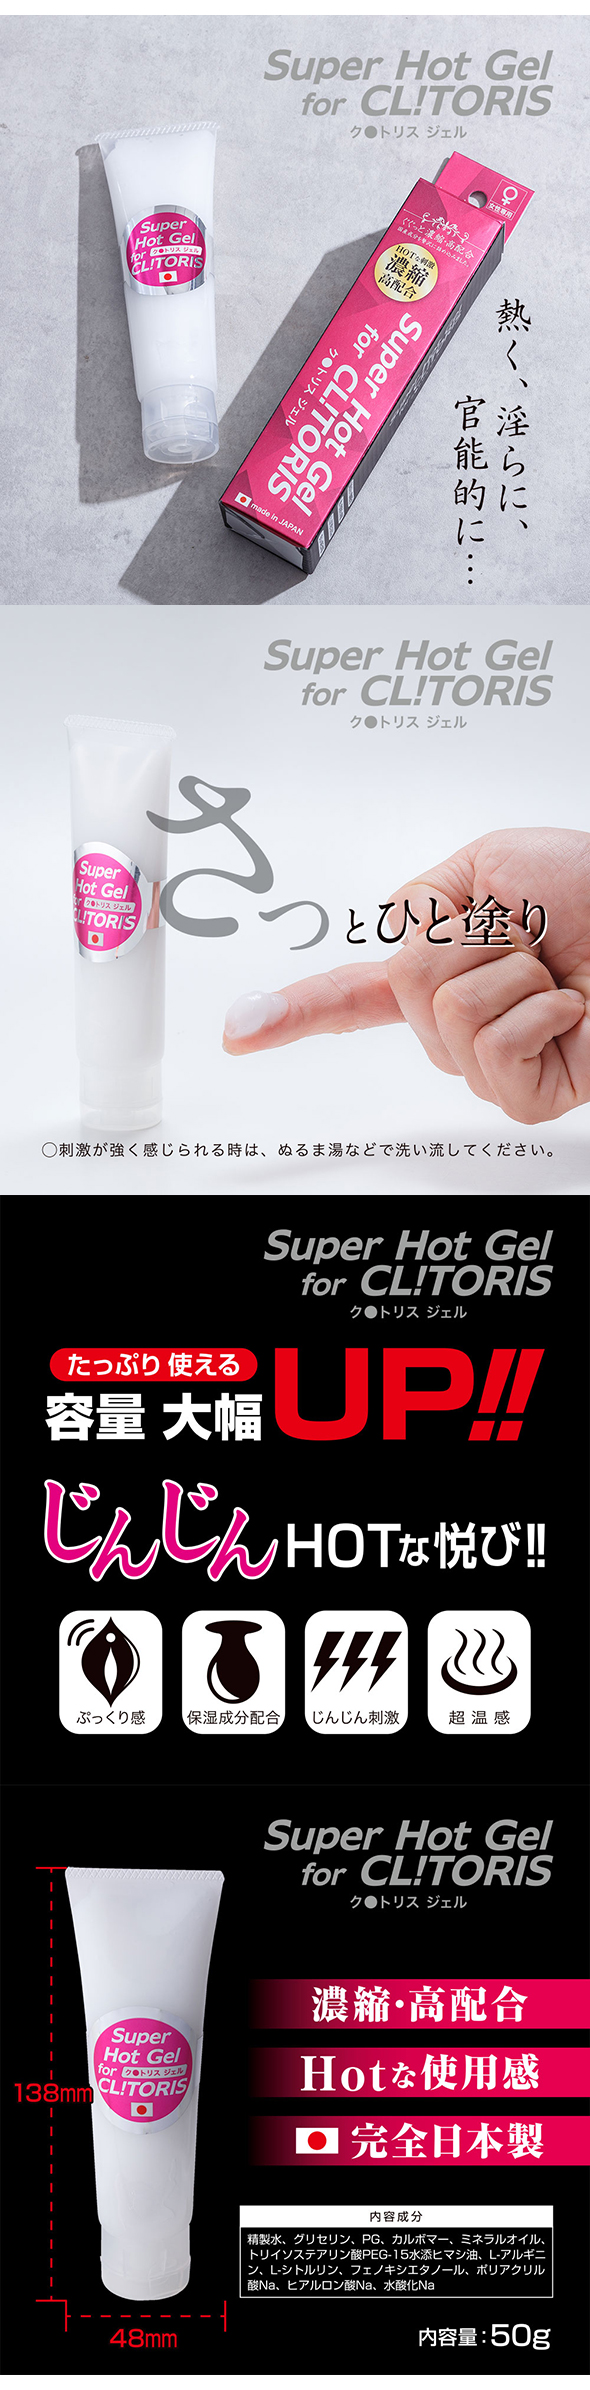 Super Hot Gel for CL!YORIS@`[u^Cv